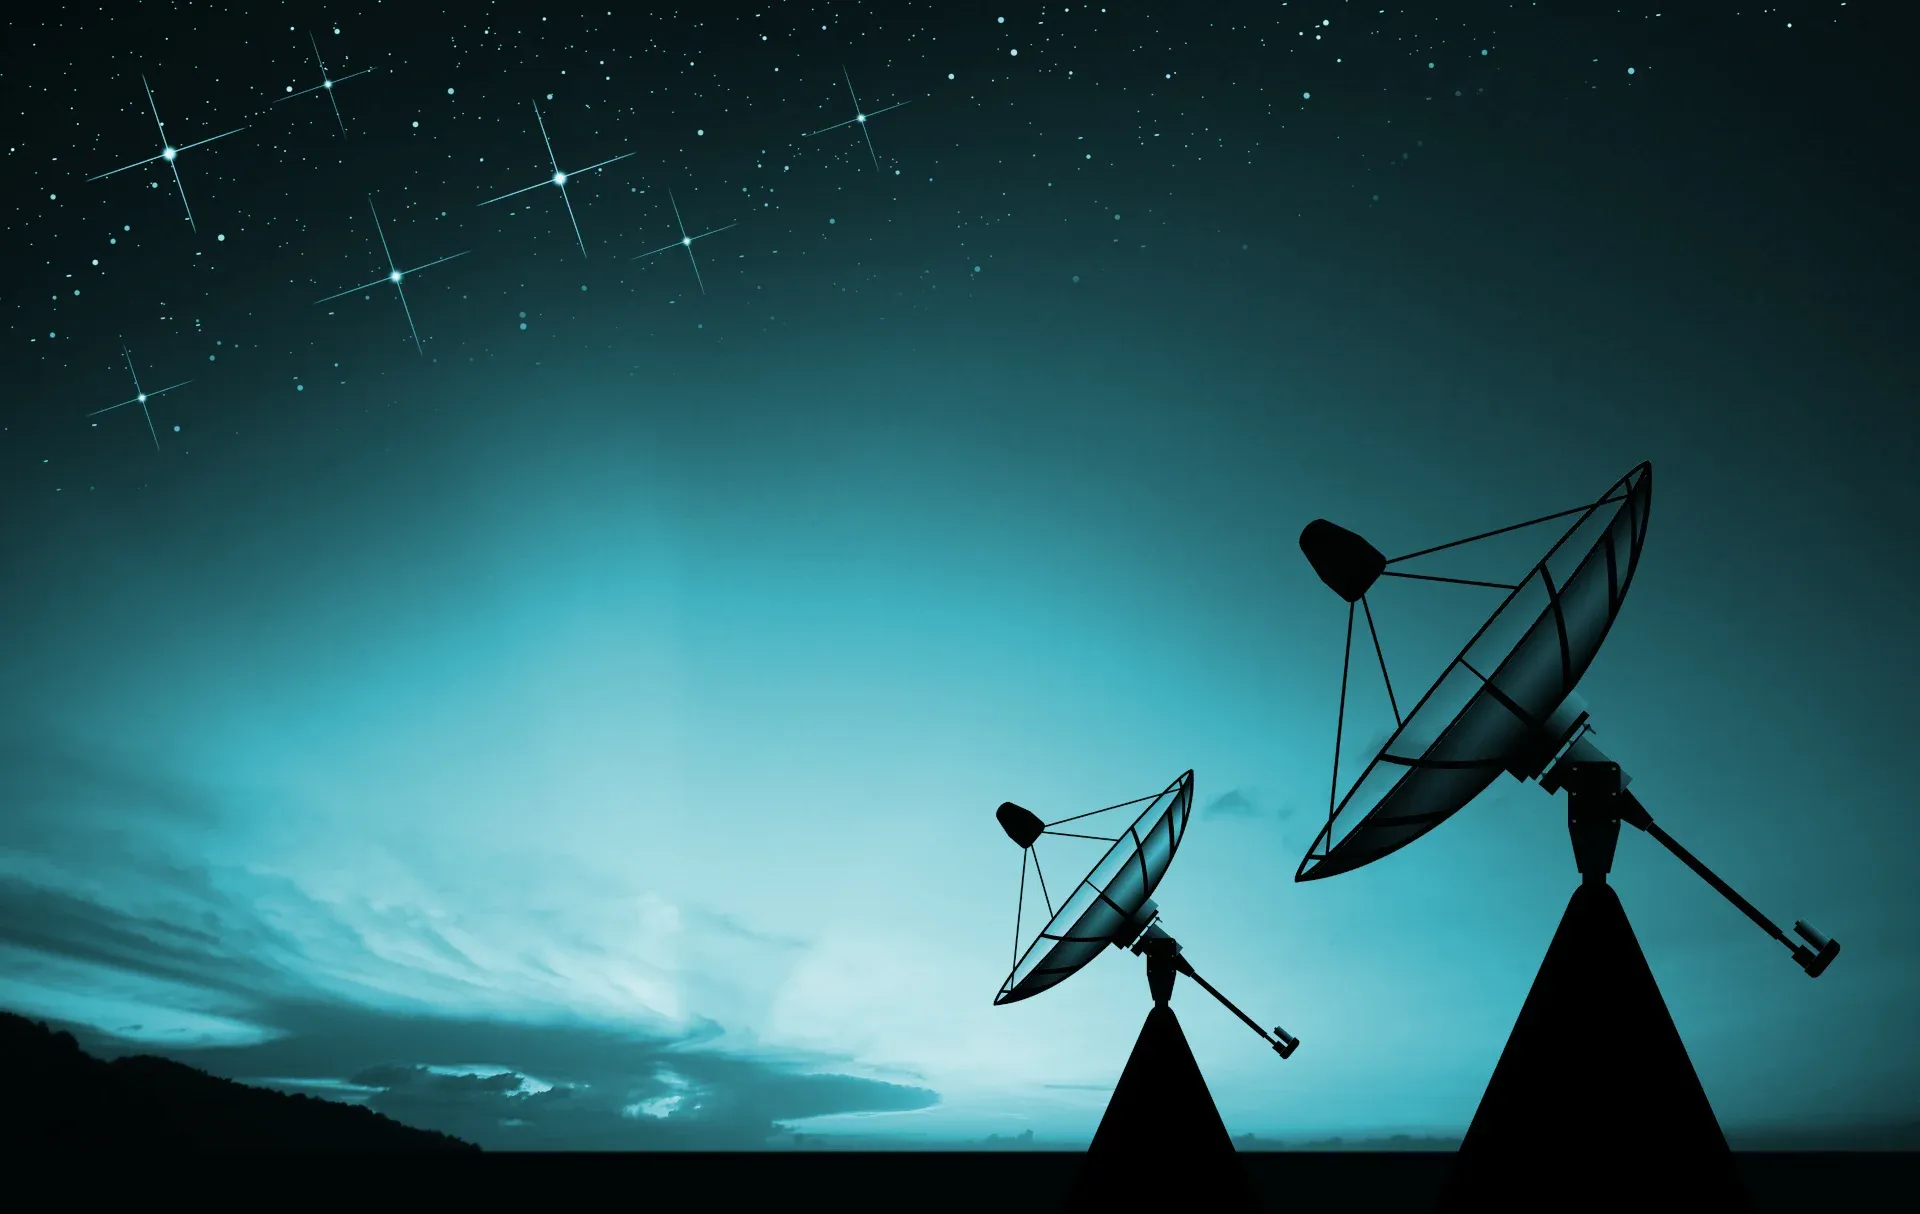 Background Image depicting life-changing technological innovation - Satellite Communication